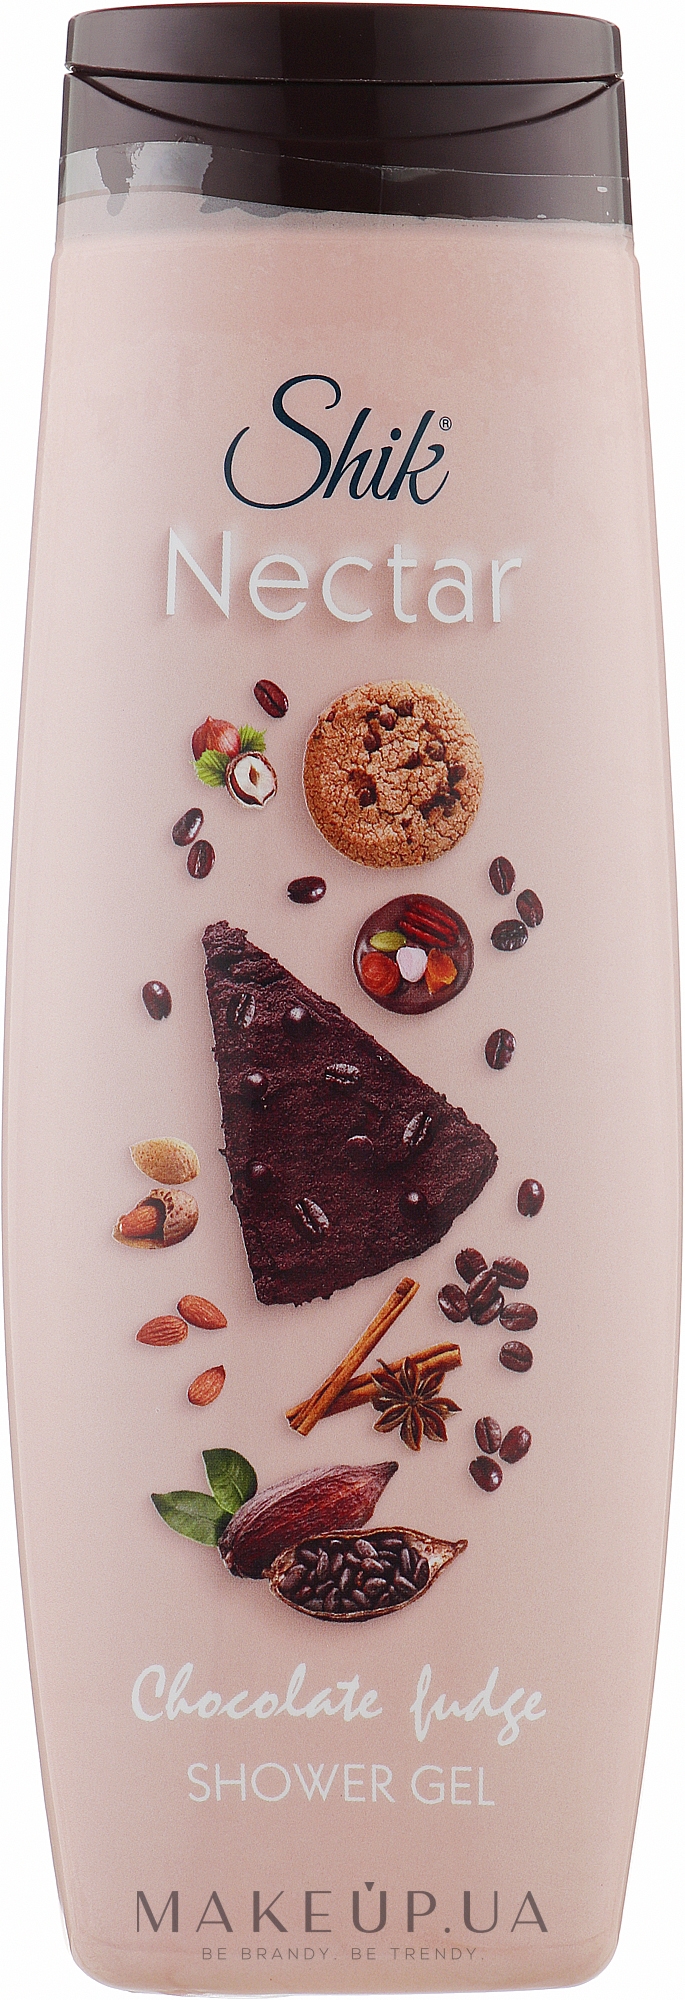 Гель для душа "Шоколадная помадка" - Shik Nectar Chocolate Fudge Shower Gel — фото 400ml